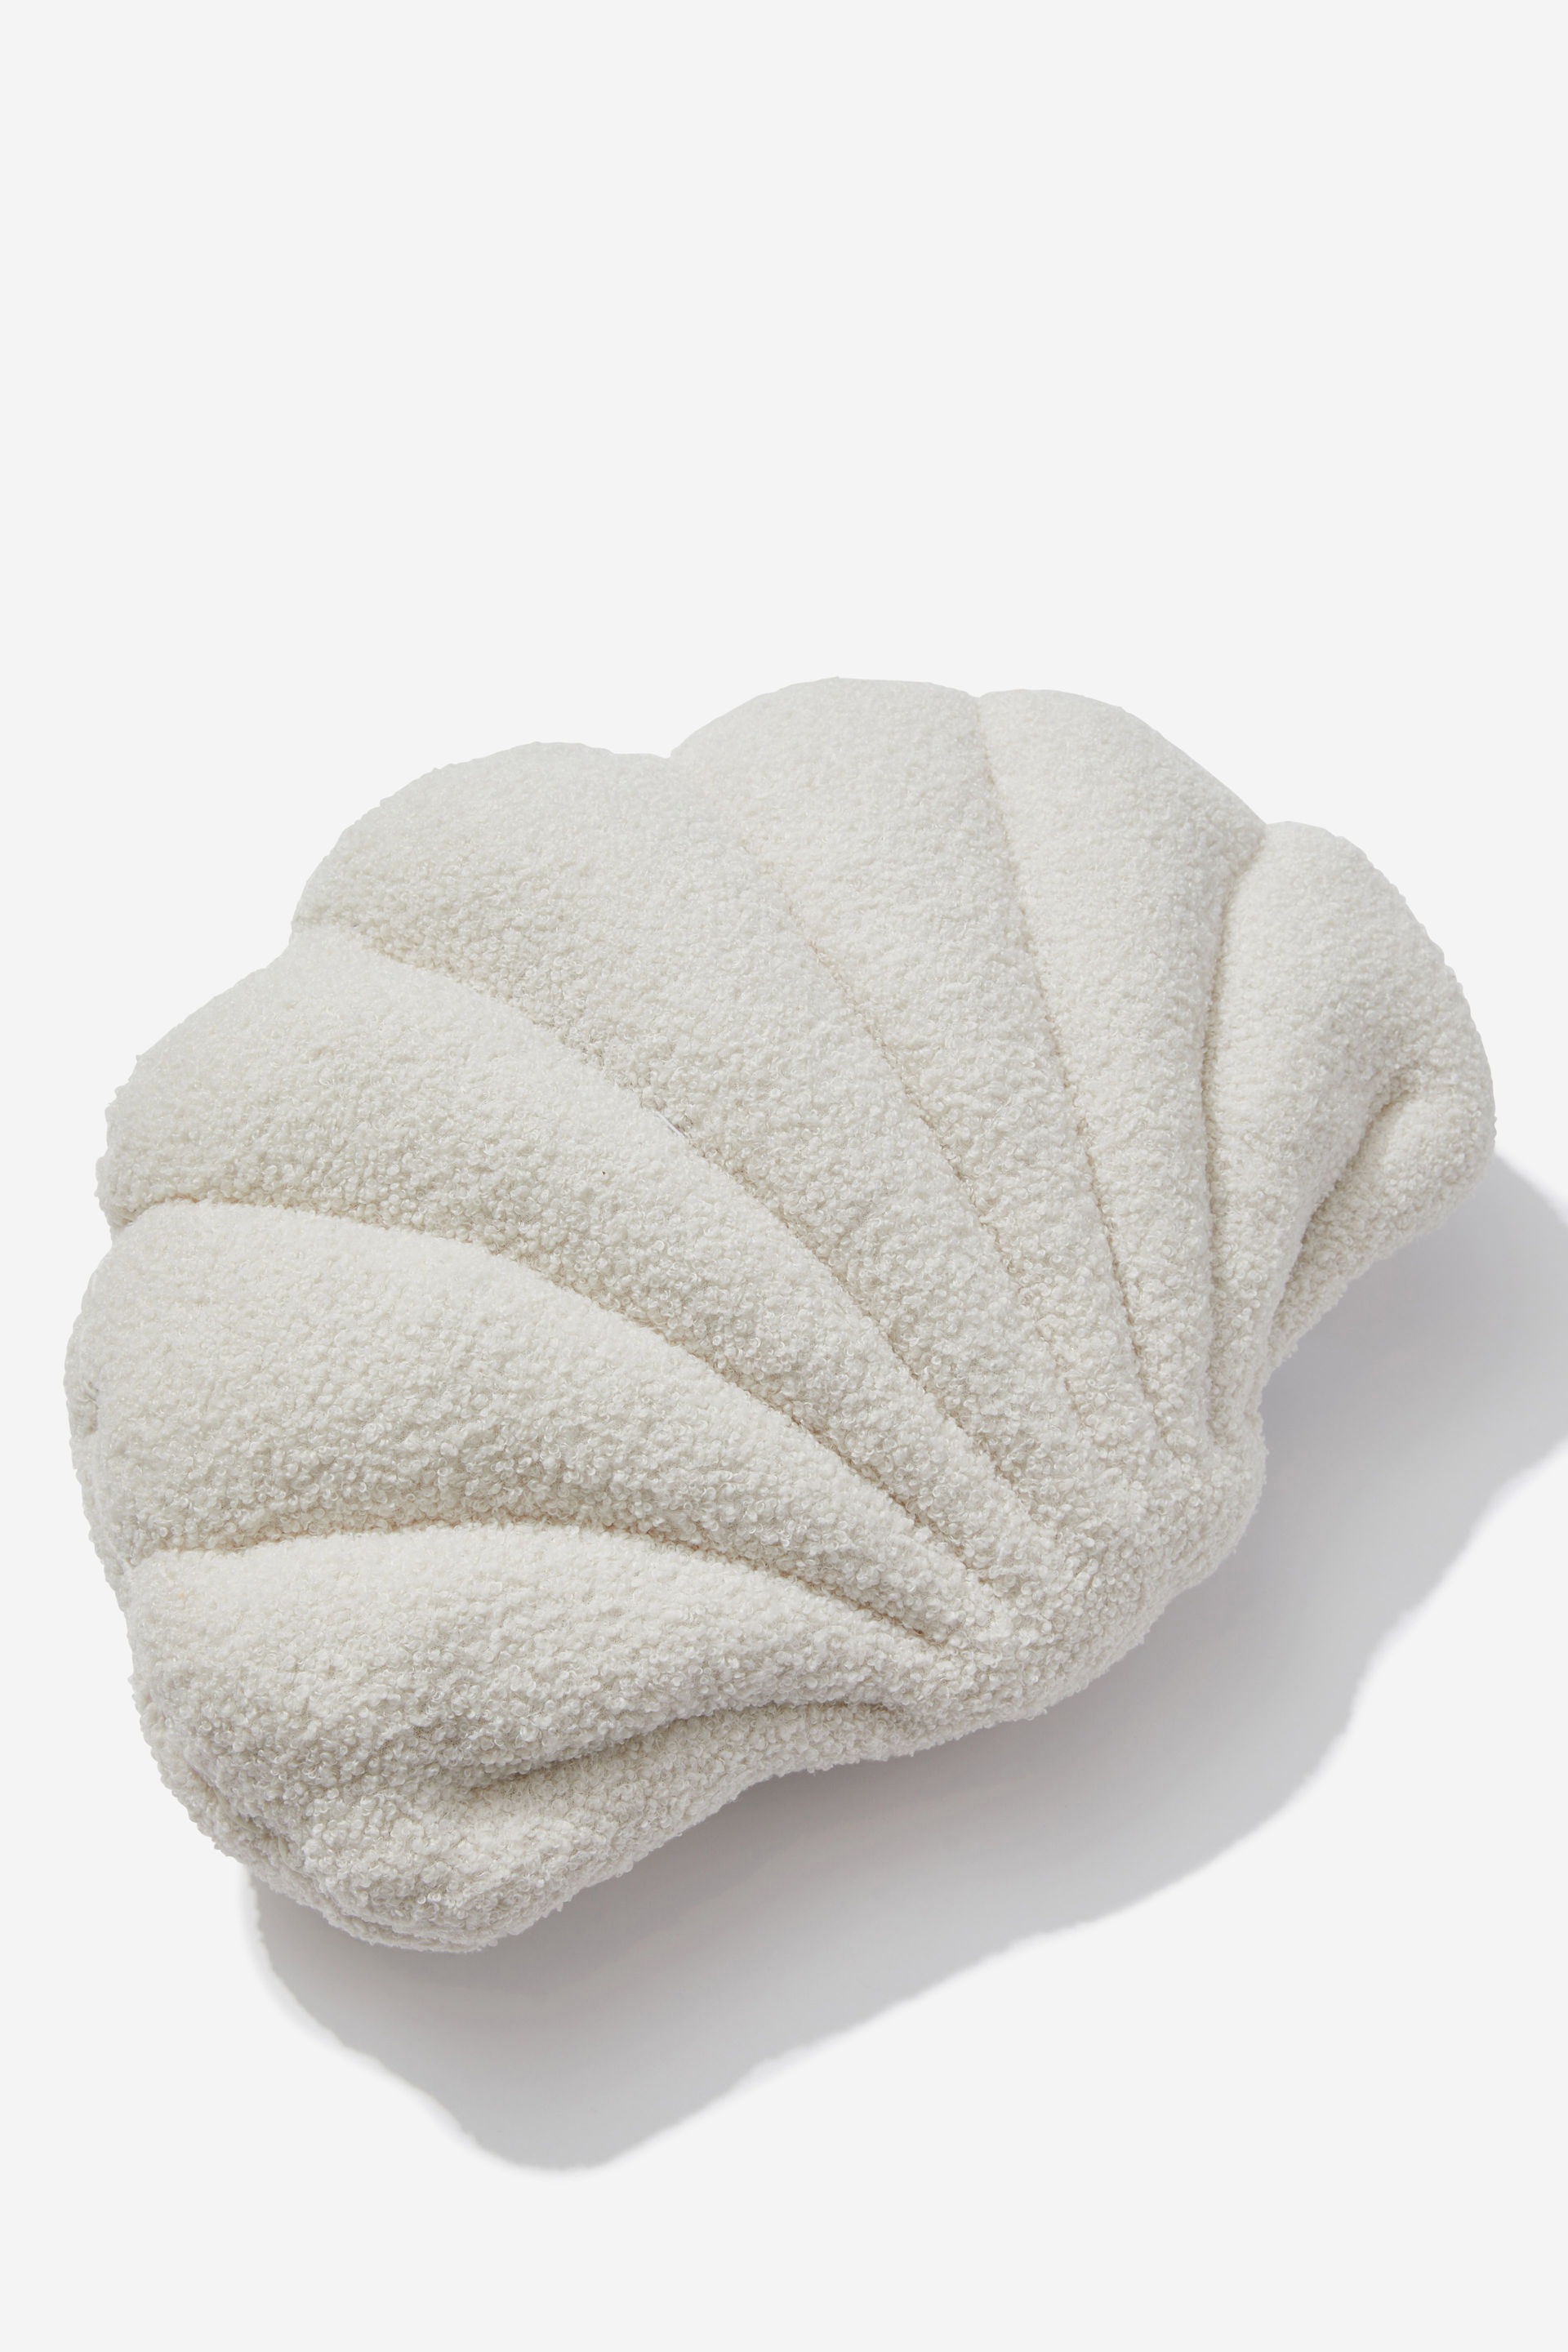 Typo - Boucle Get Cushy Cushion - Ecru shell